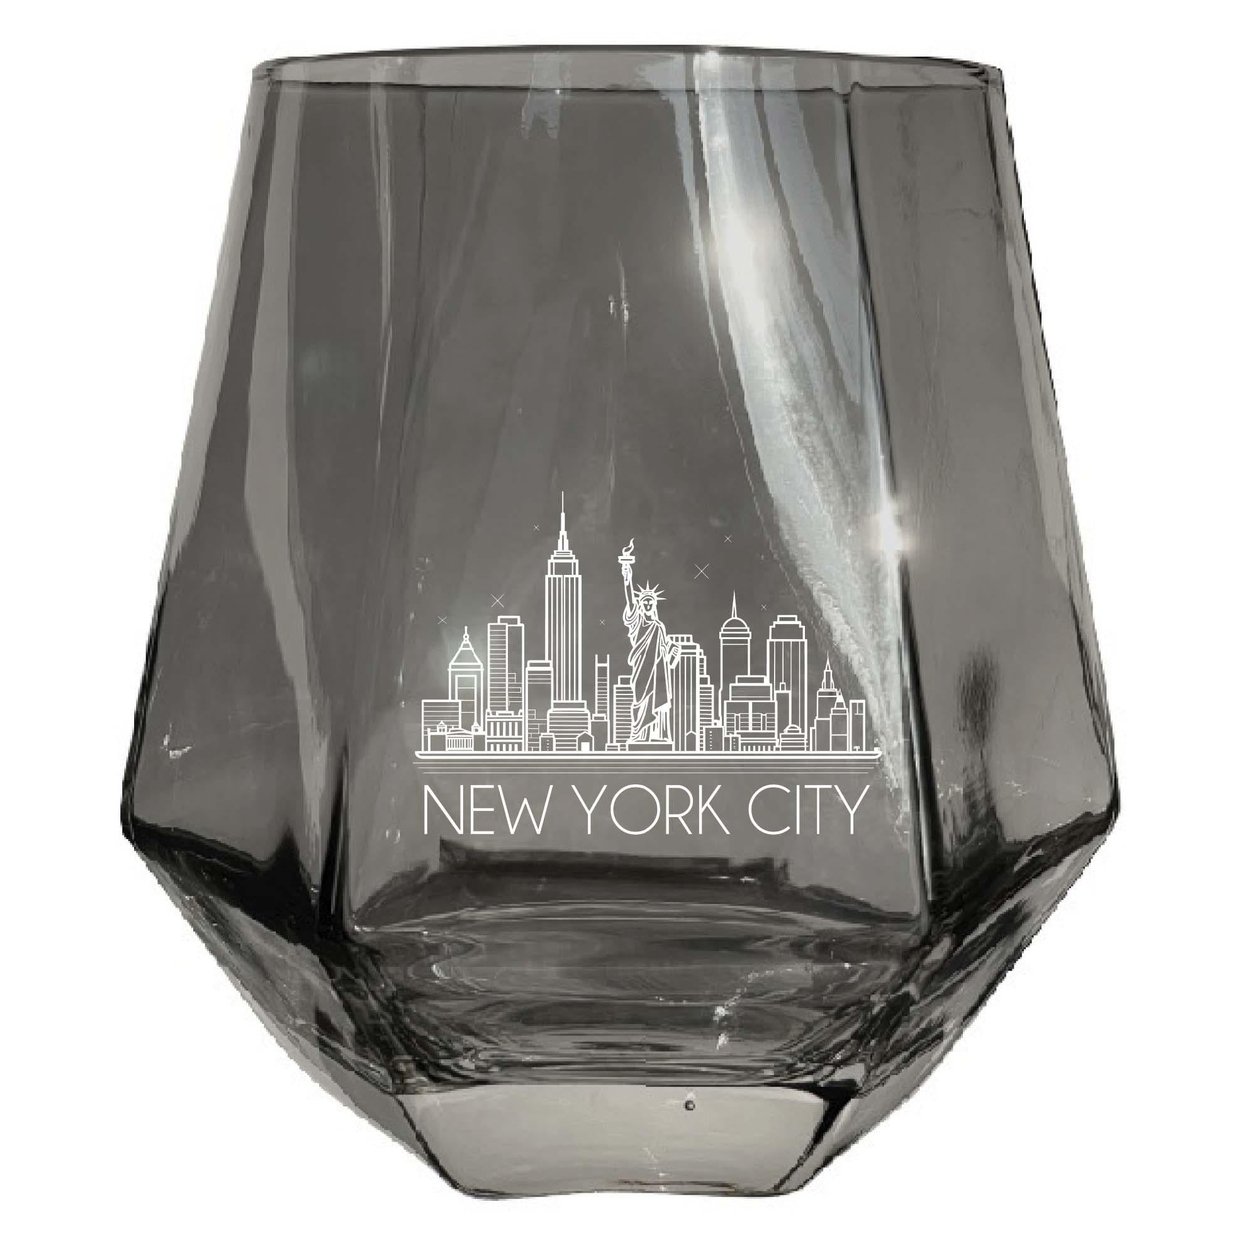 New York City Souvenir Wine Glass EngravedDiamond 15 Oz - Clear,,4-Pack